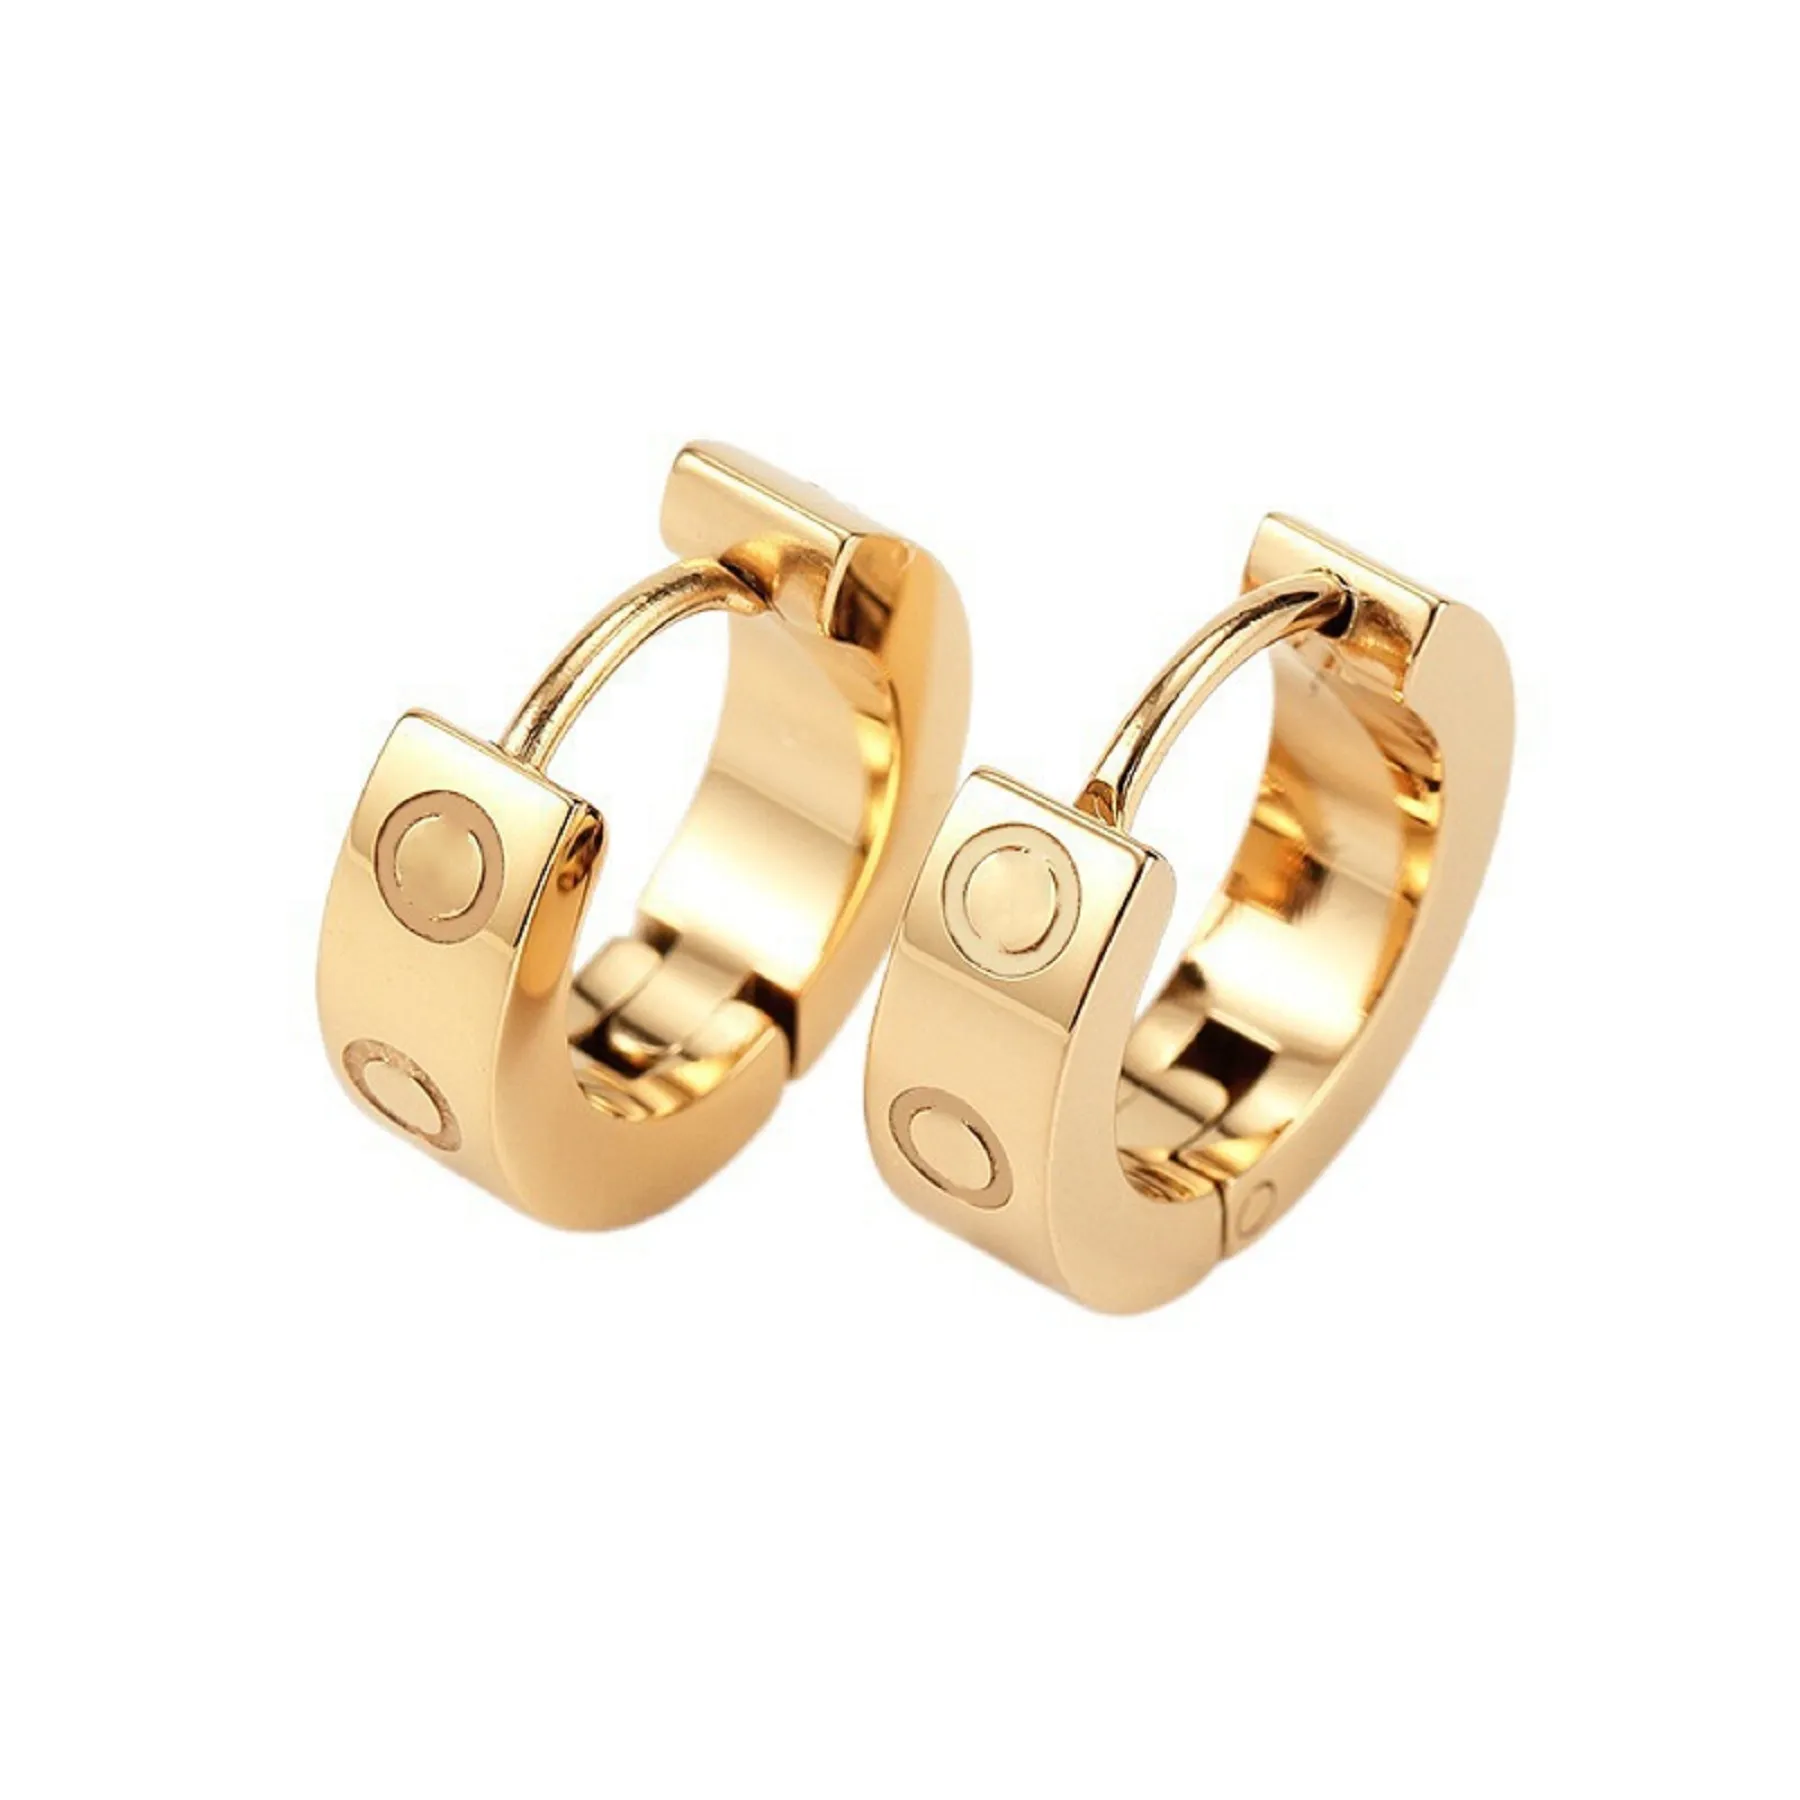 Hoop earrings gold diamond stud earrings Titanium steel screw love earings for women exquisite simple fashion 18K Gold-Plated circle